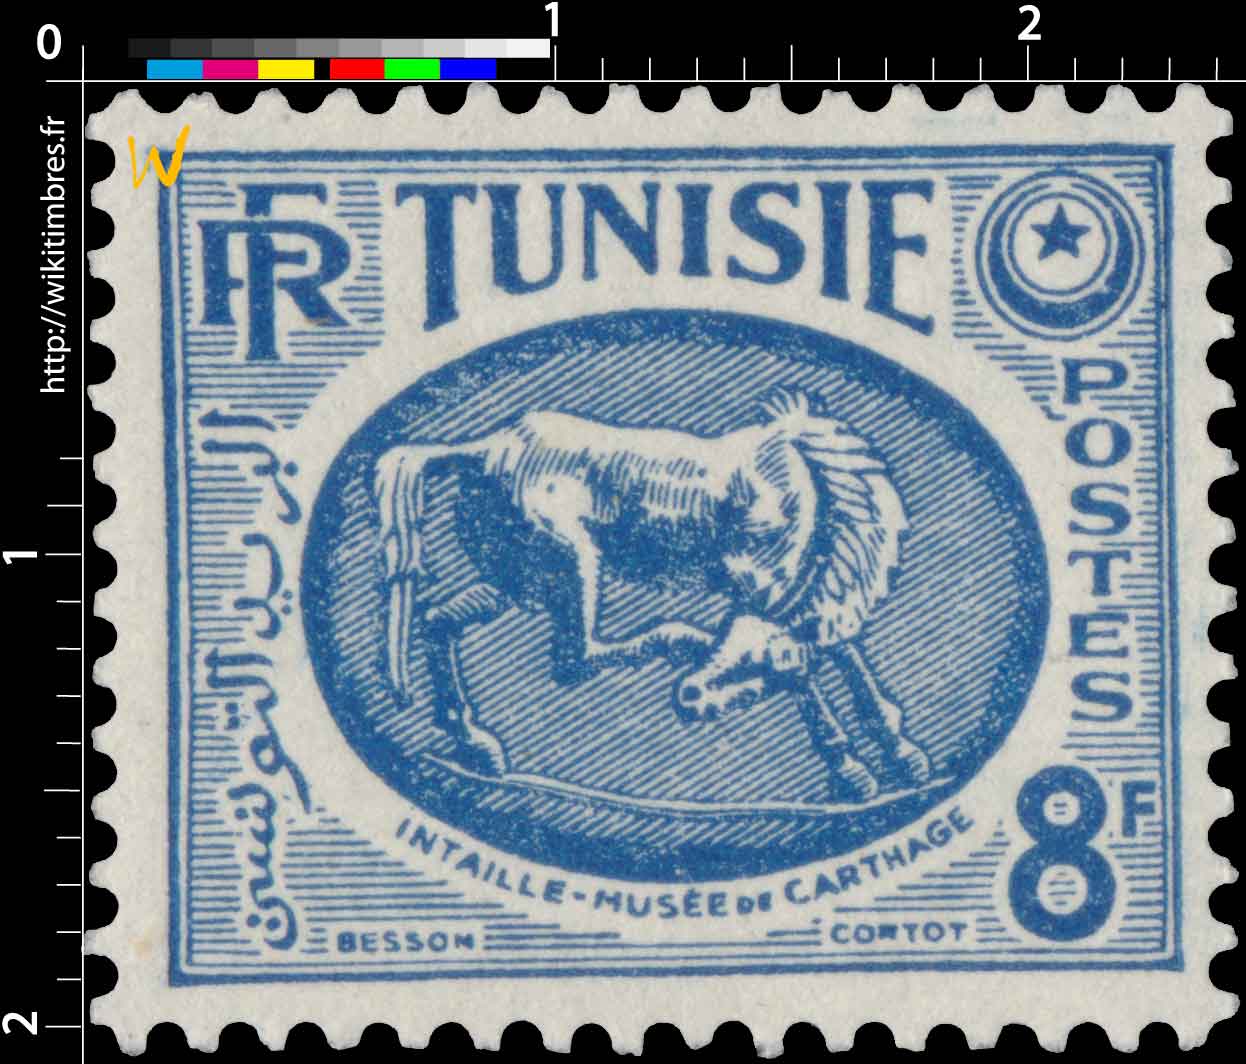 Tunisie - Intaille du musée de Carthage